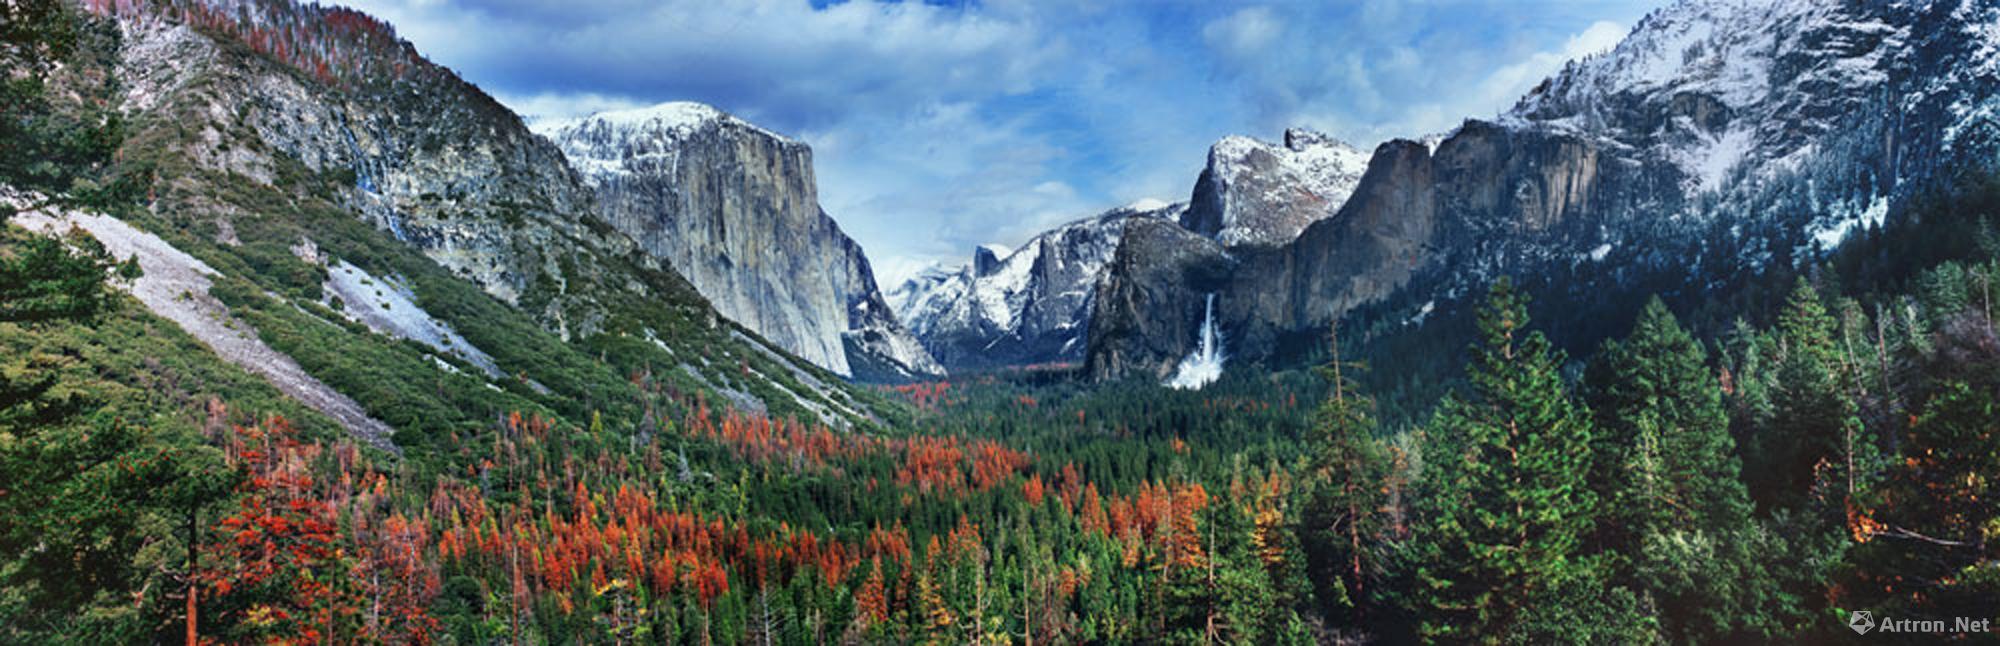 优胜美地国家公园 Yosemite National Park